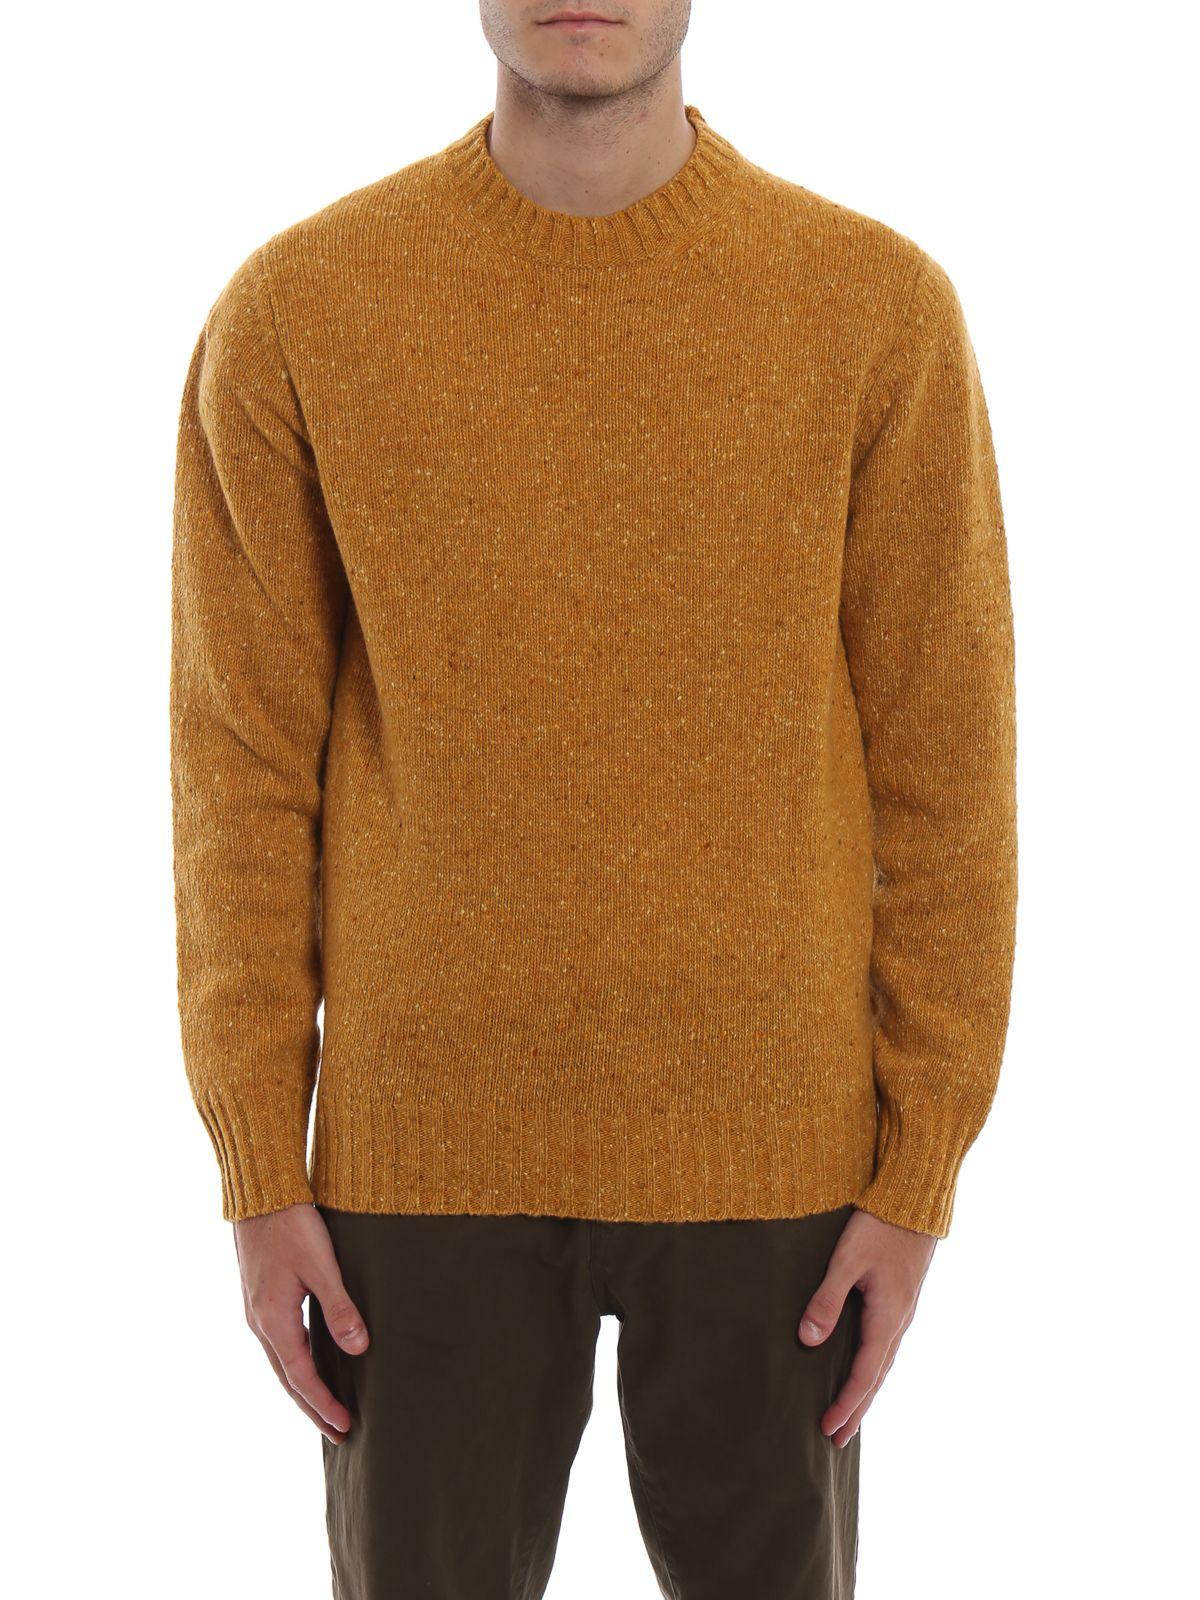 Aspesi Wool Sweater in Yellow for Men - Lyst